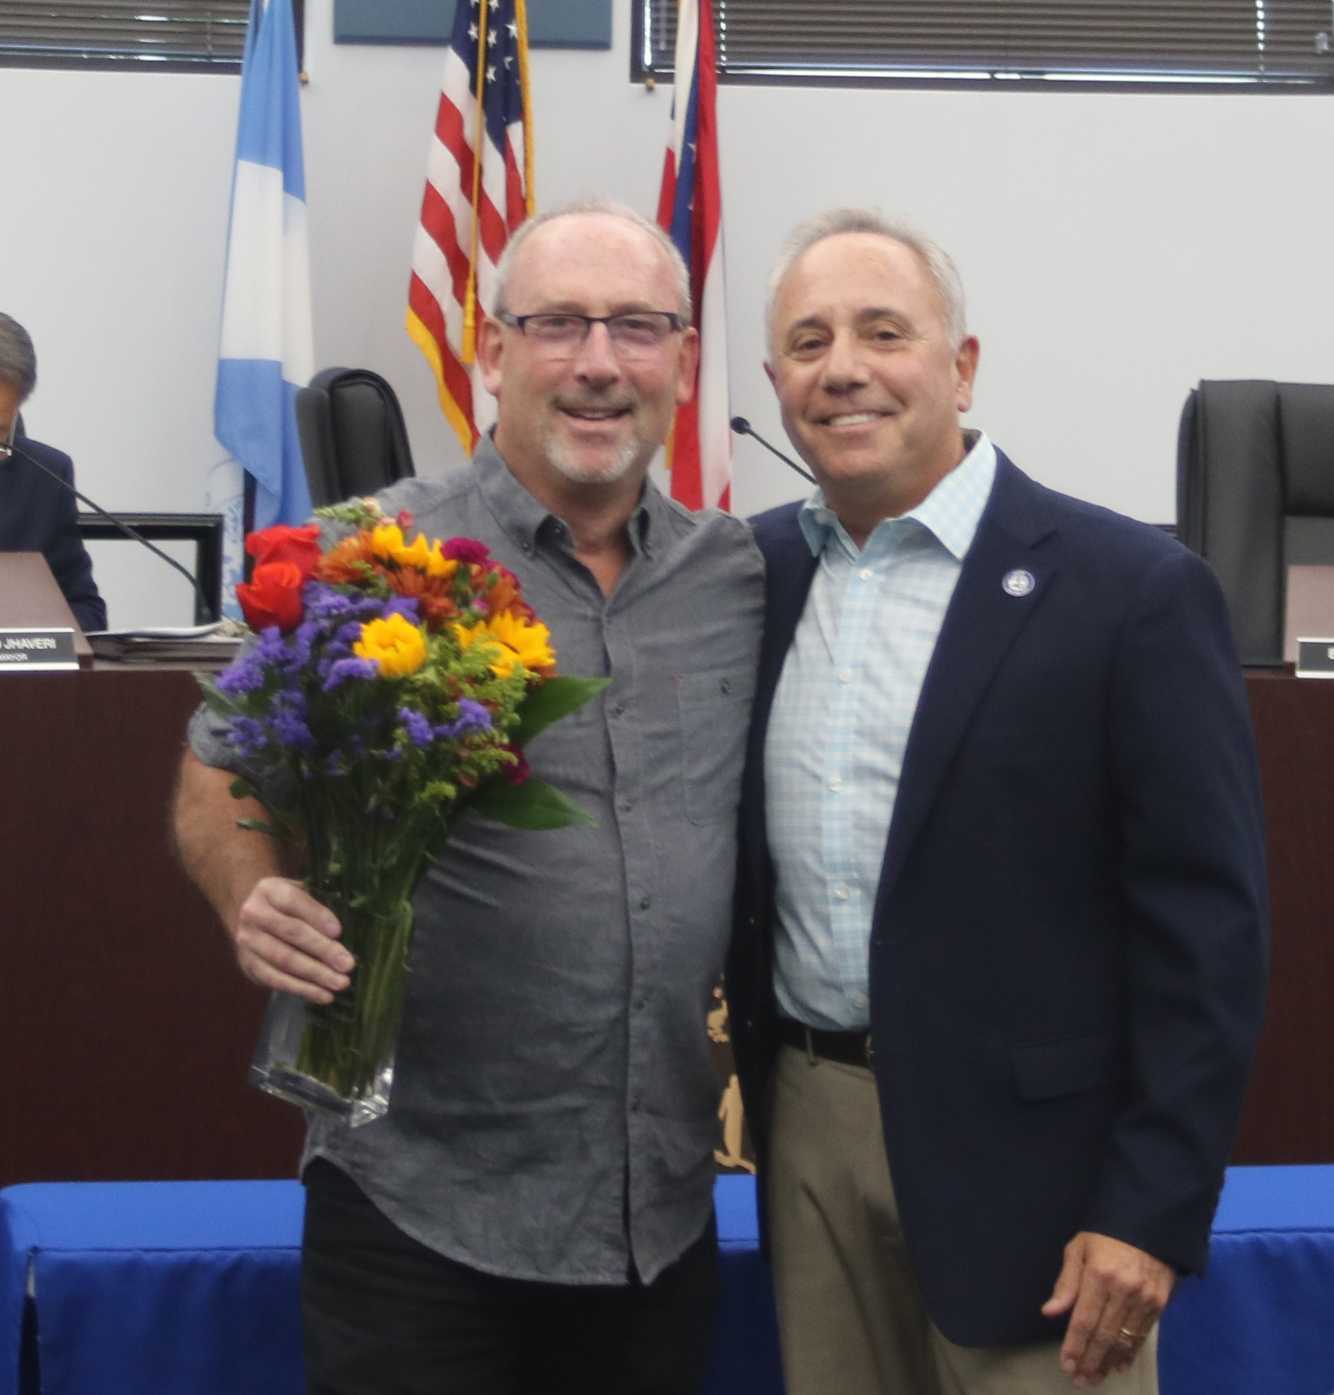 Mr. Kaufman with flowers and Mayor Sirkin